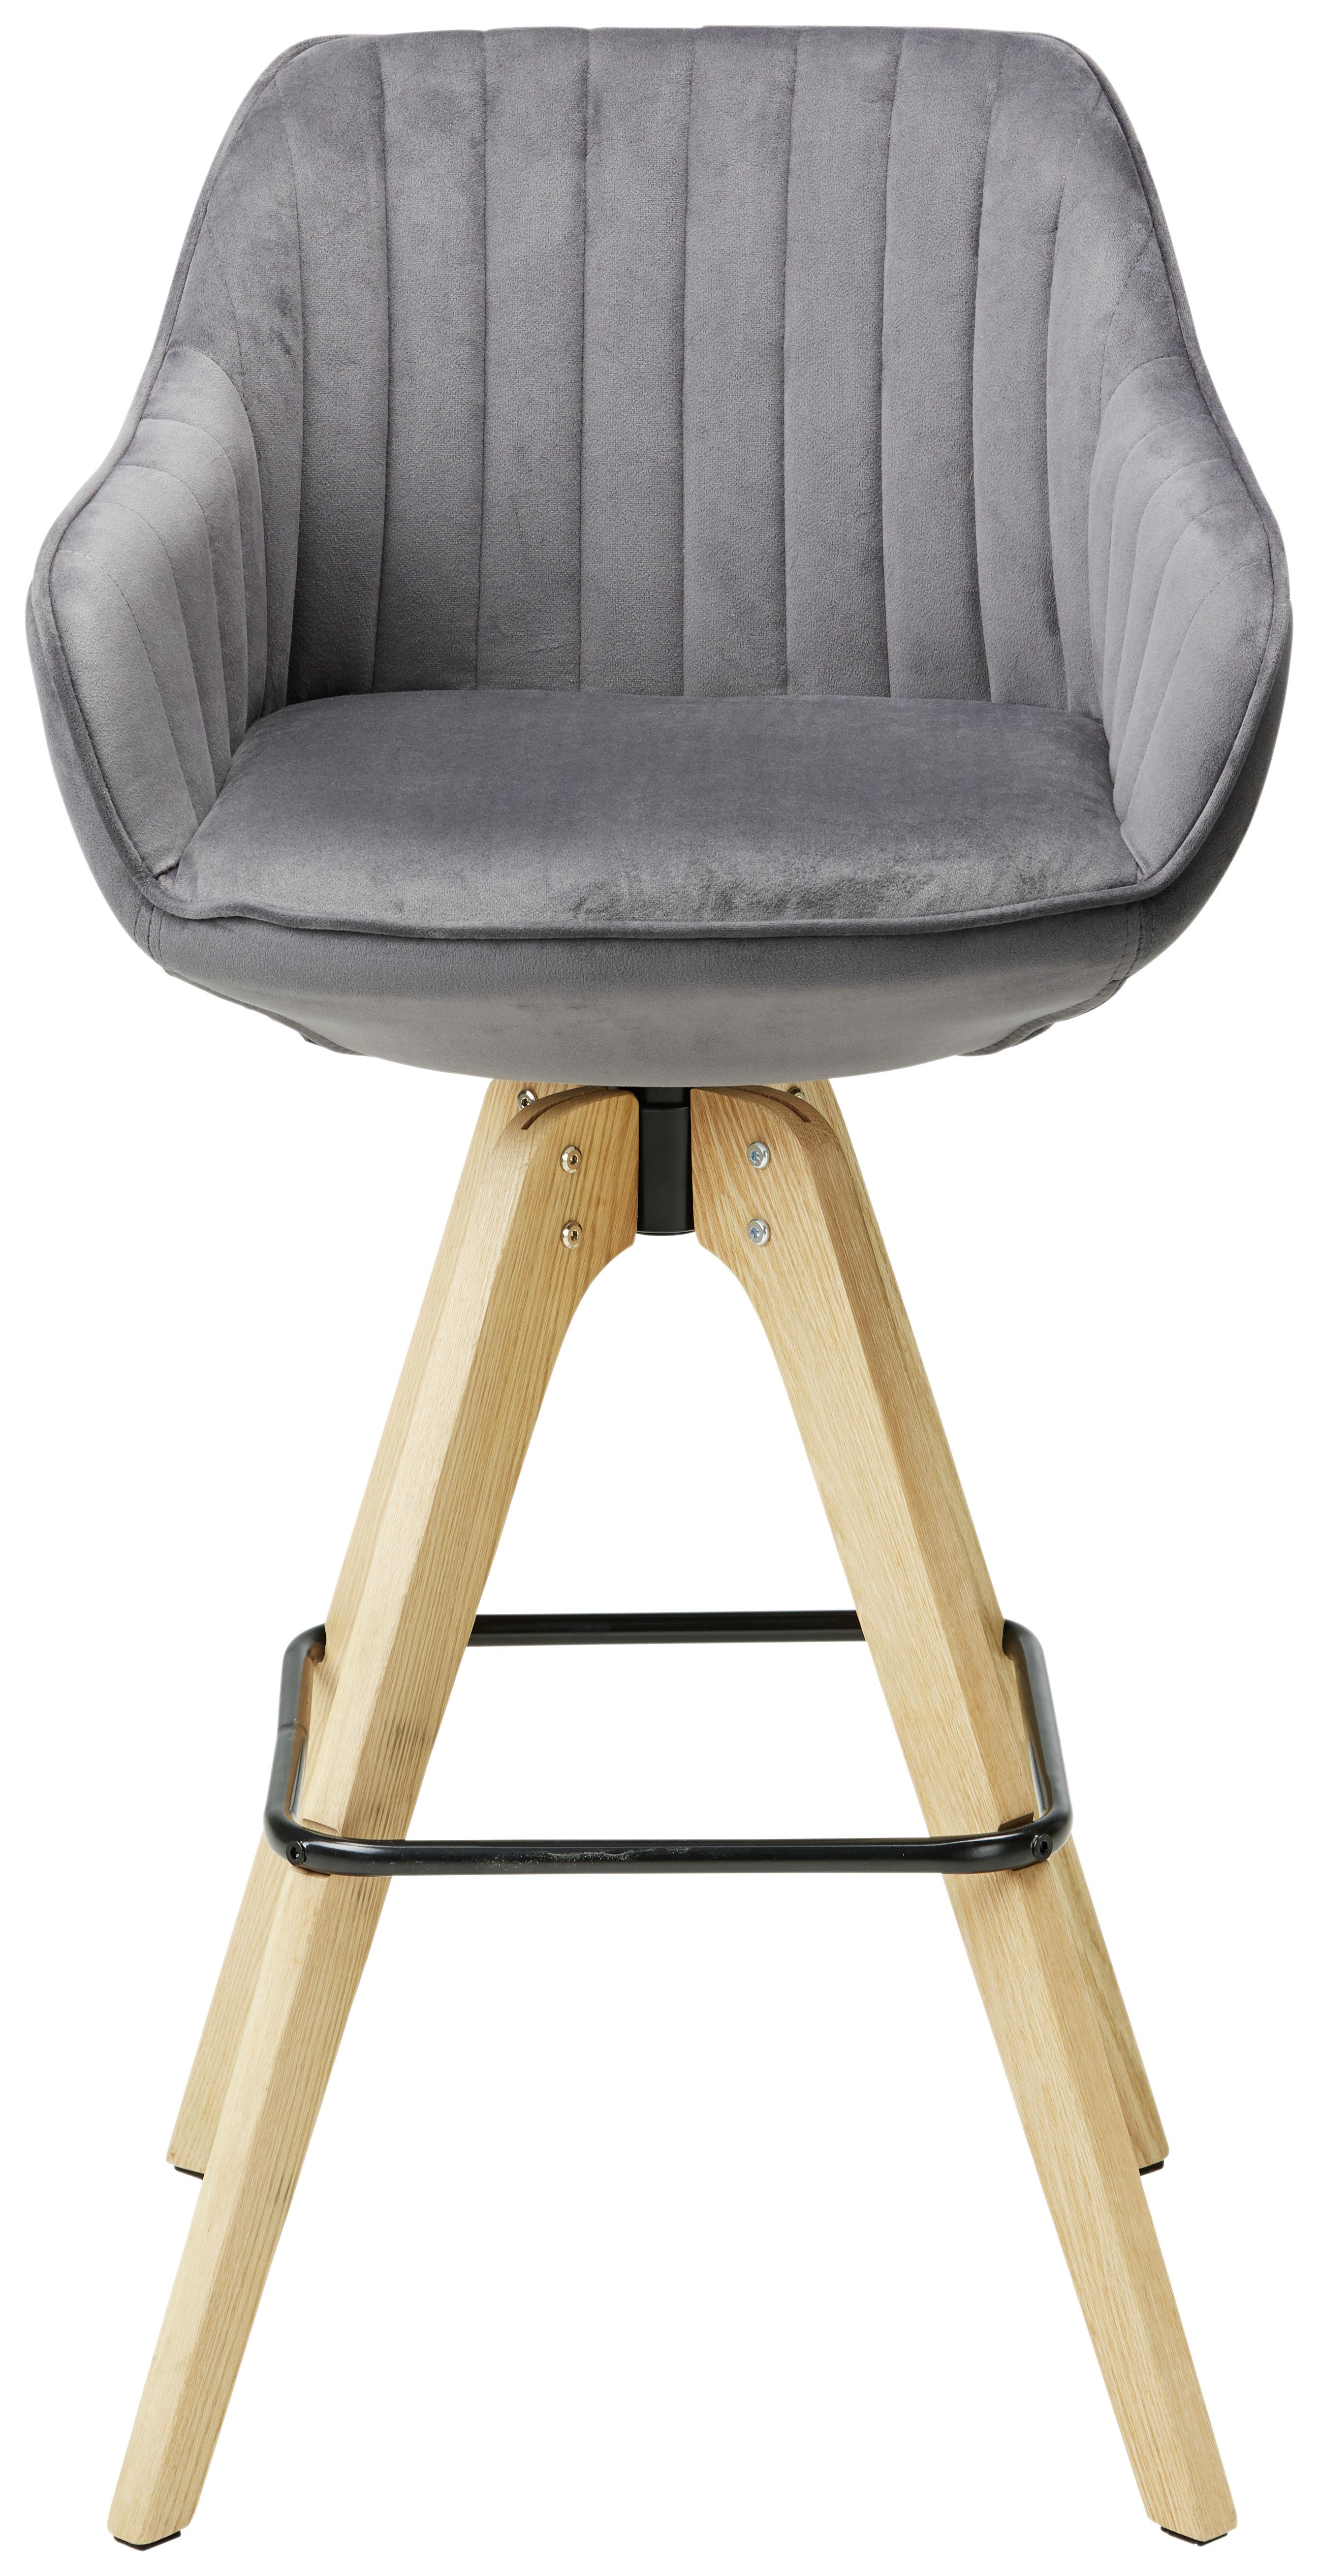 Barska Stolica Chill - tamno siva/prirodne boje, Modern, drvo/tekstil (55/106/78/56cm) - Premium Living